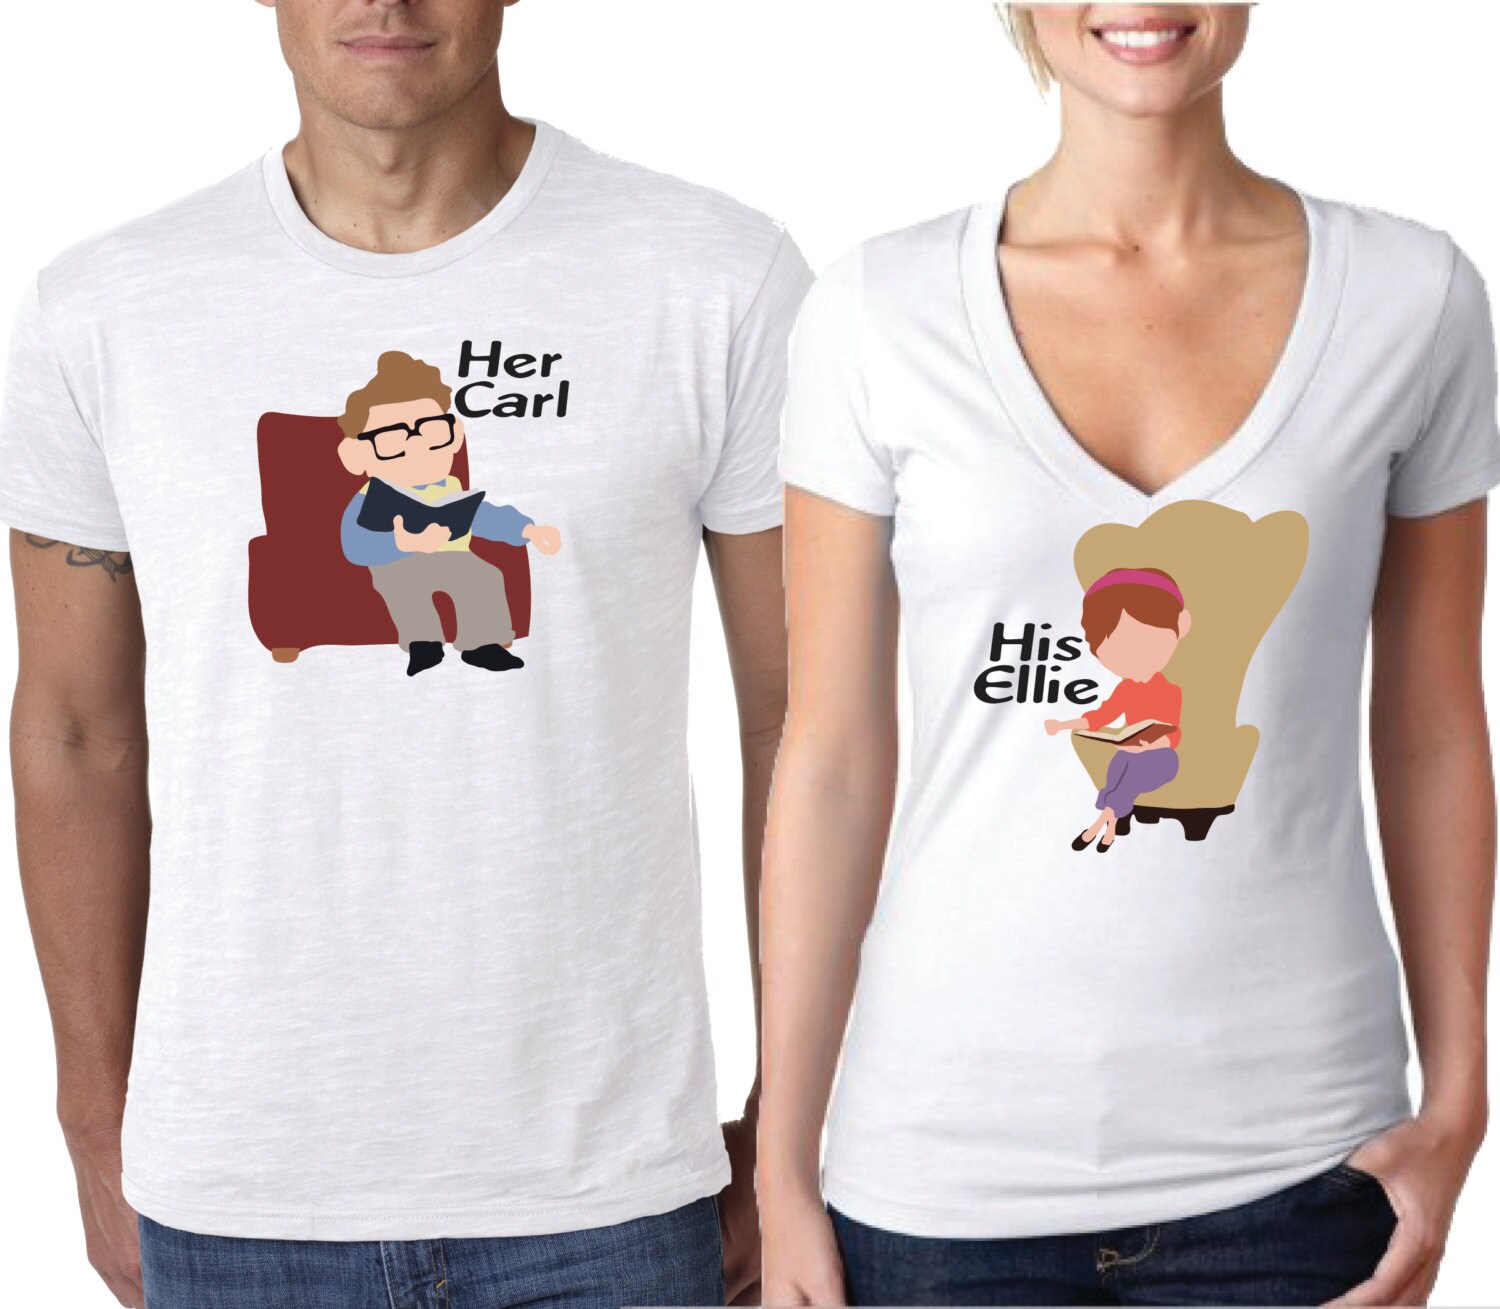 Disney Shirts Couples Shirt Up Shirts Carl and Ellie Shirt